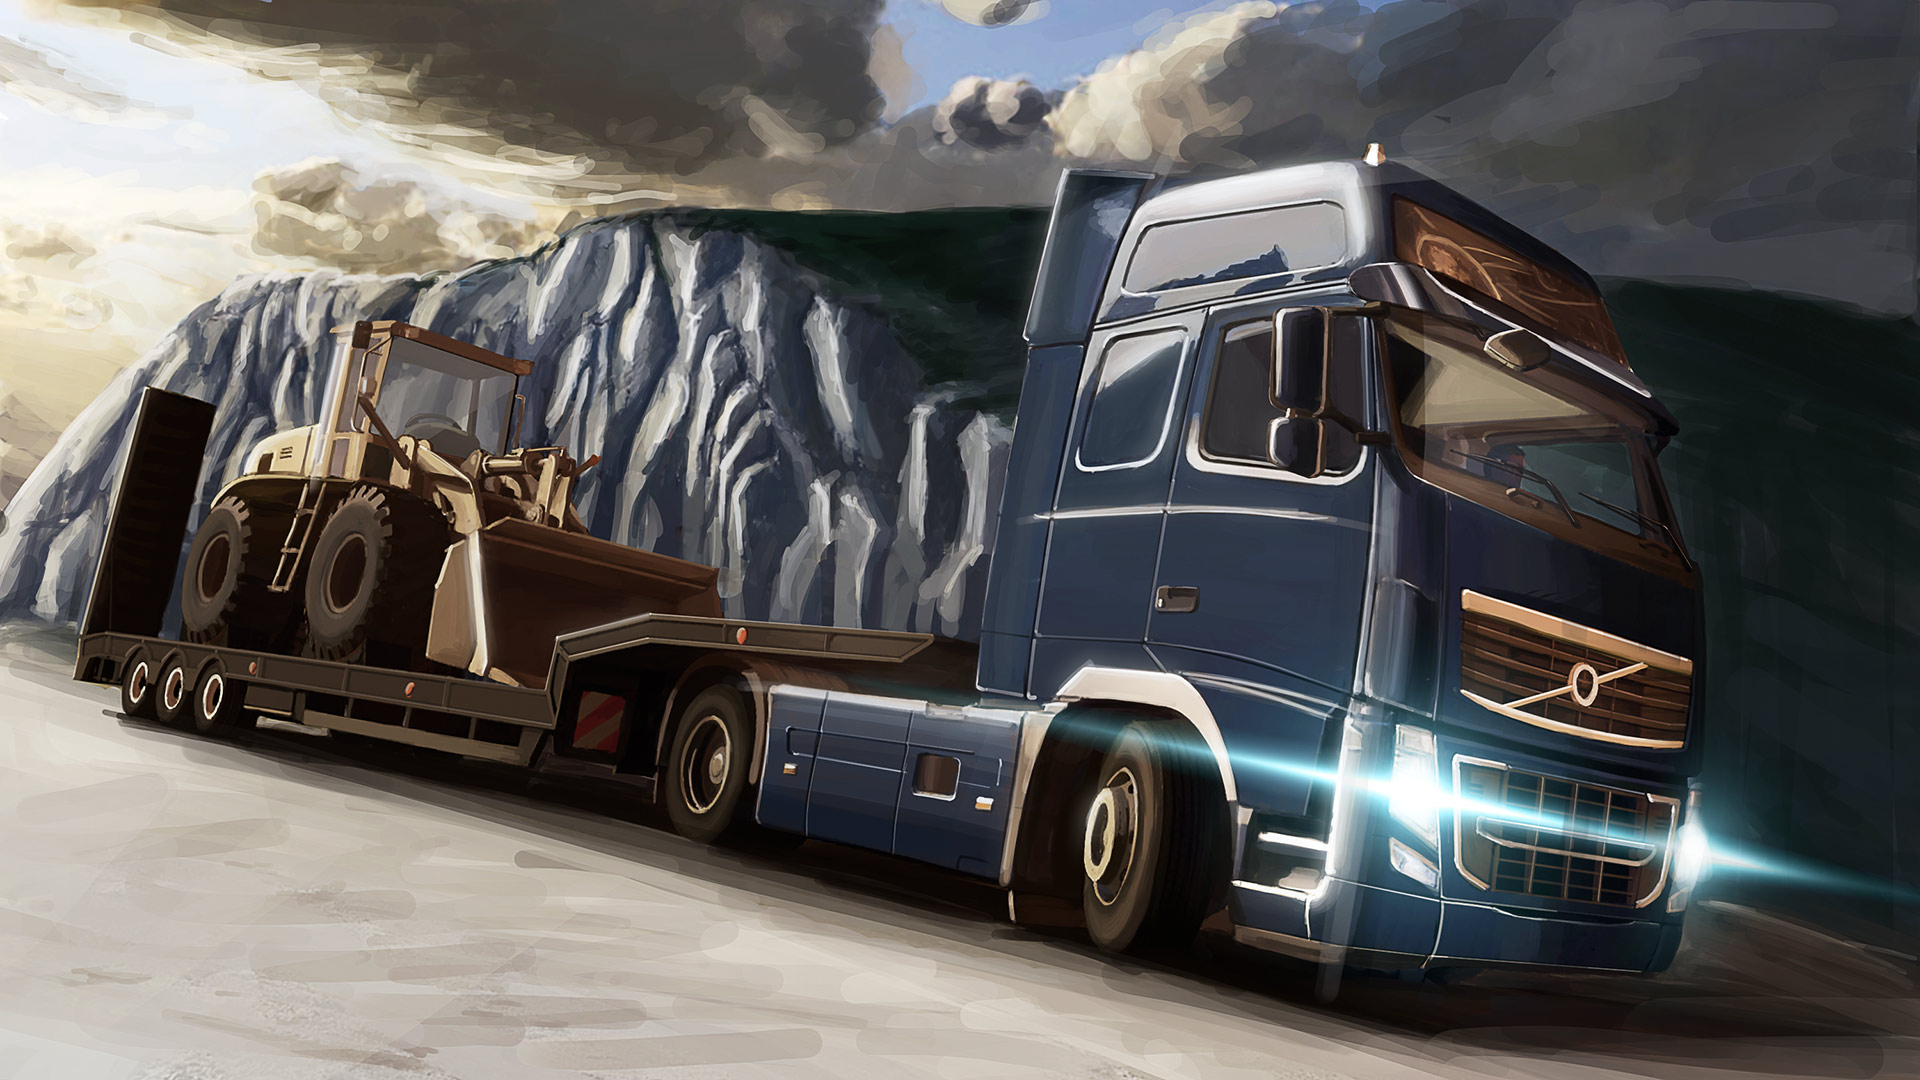 Euro Truck Simulator Tractor Semi Rigs Rig D Wallpaper Background